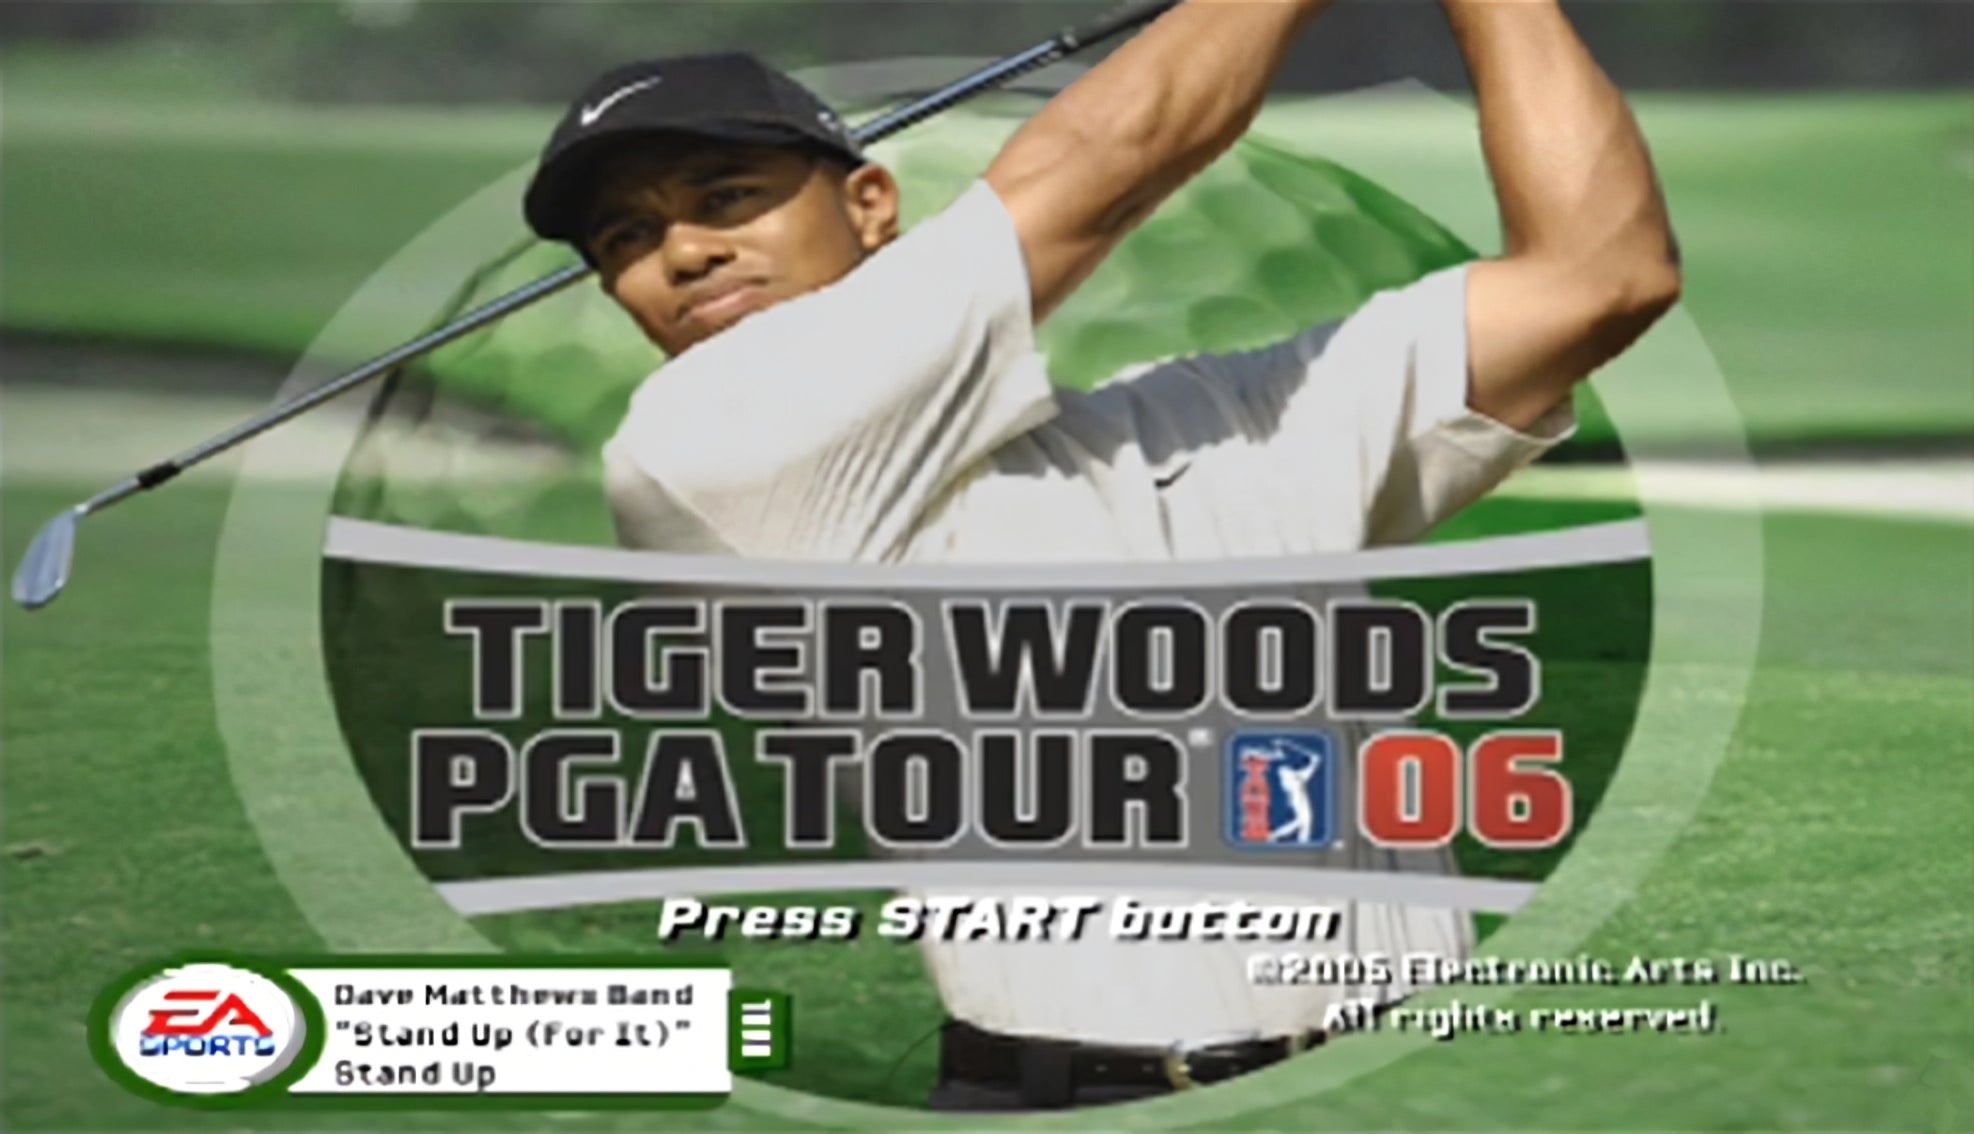 Tiger Woods PGA Tour 06 - PlayStation 2 (PS2) Game